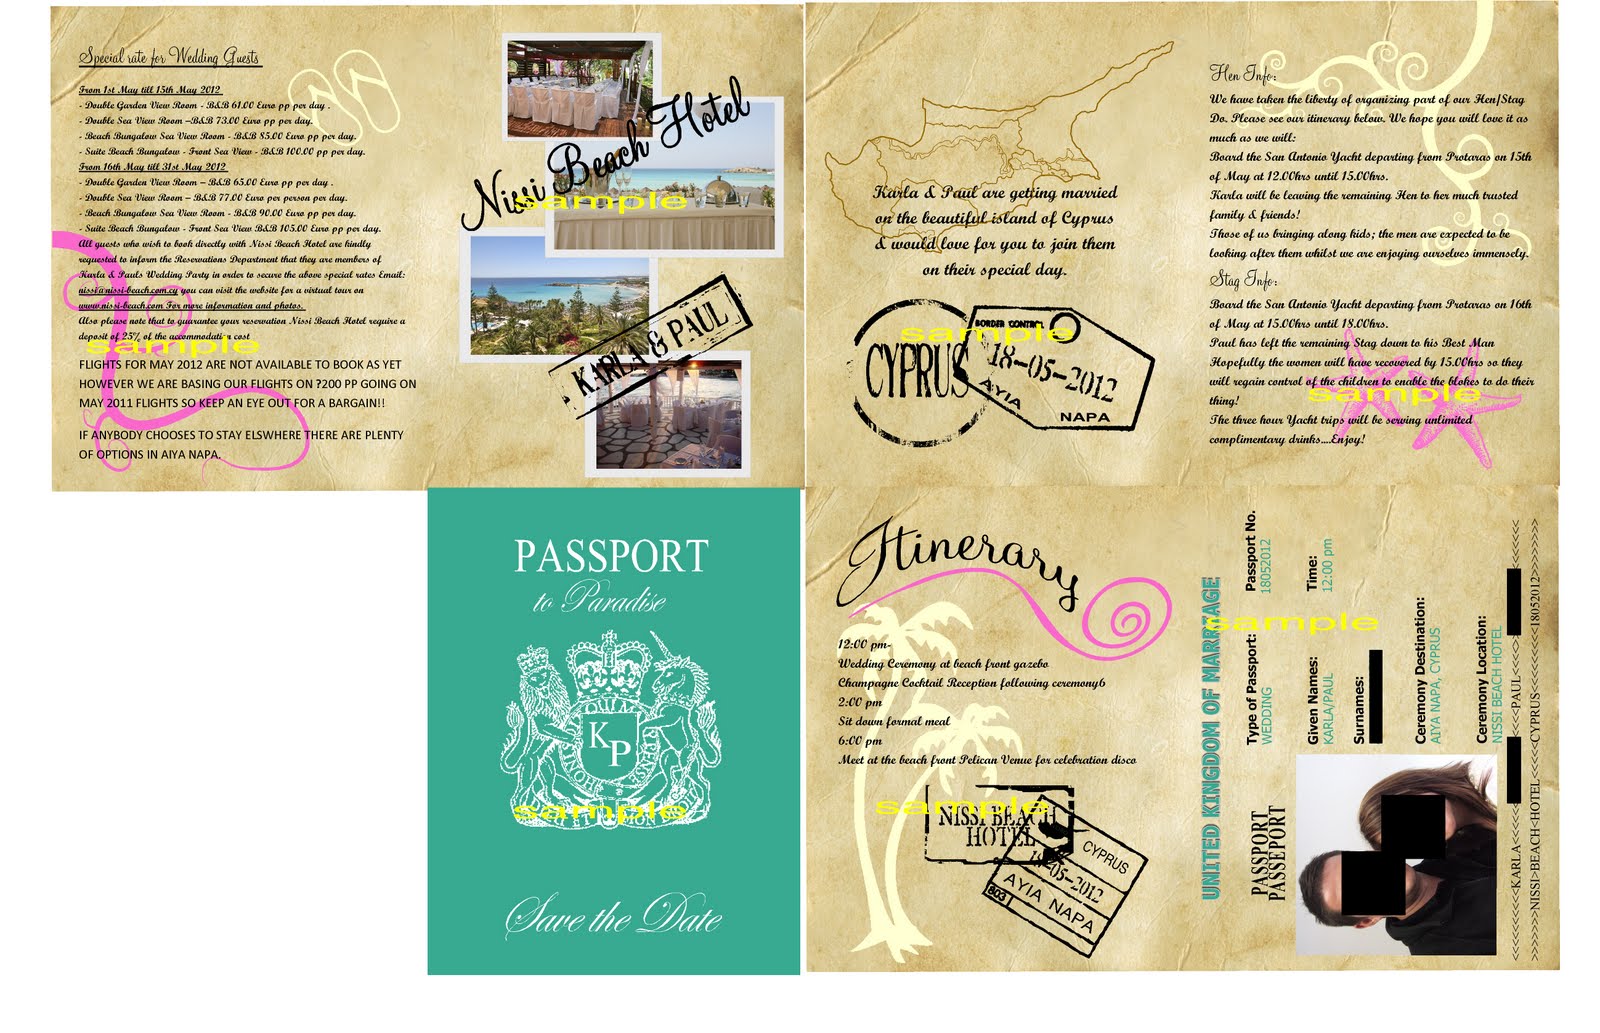 Passport Birthday Invitation Template